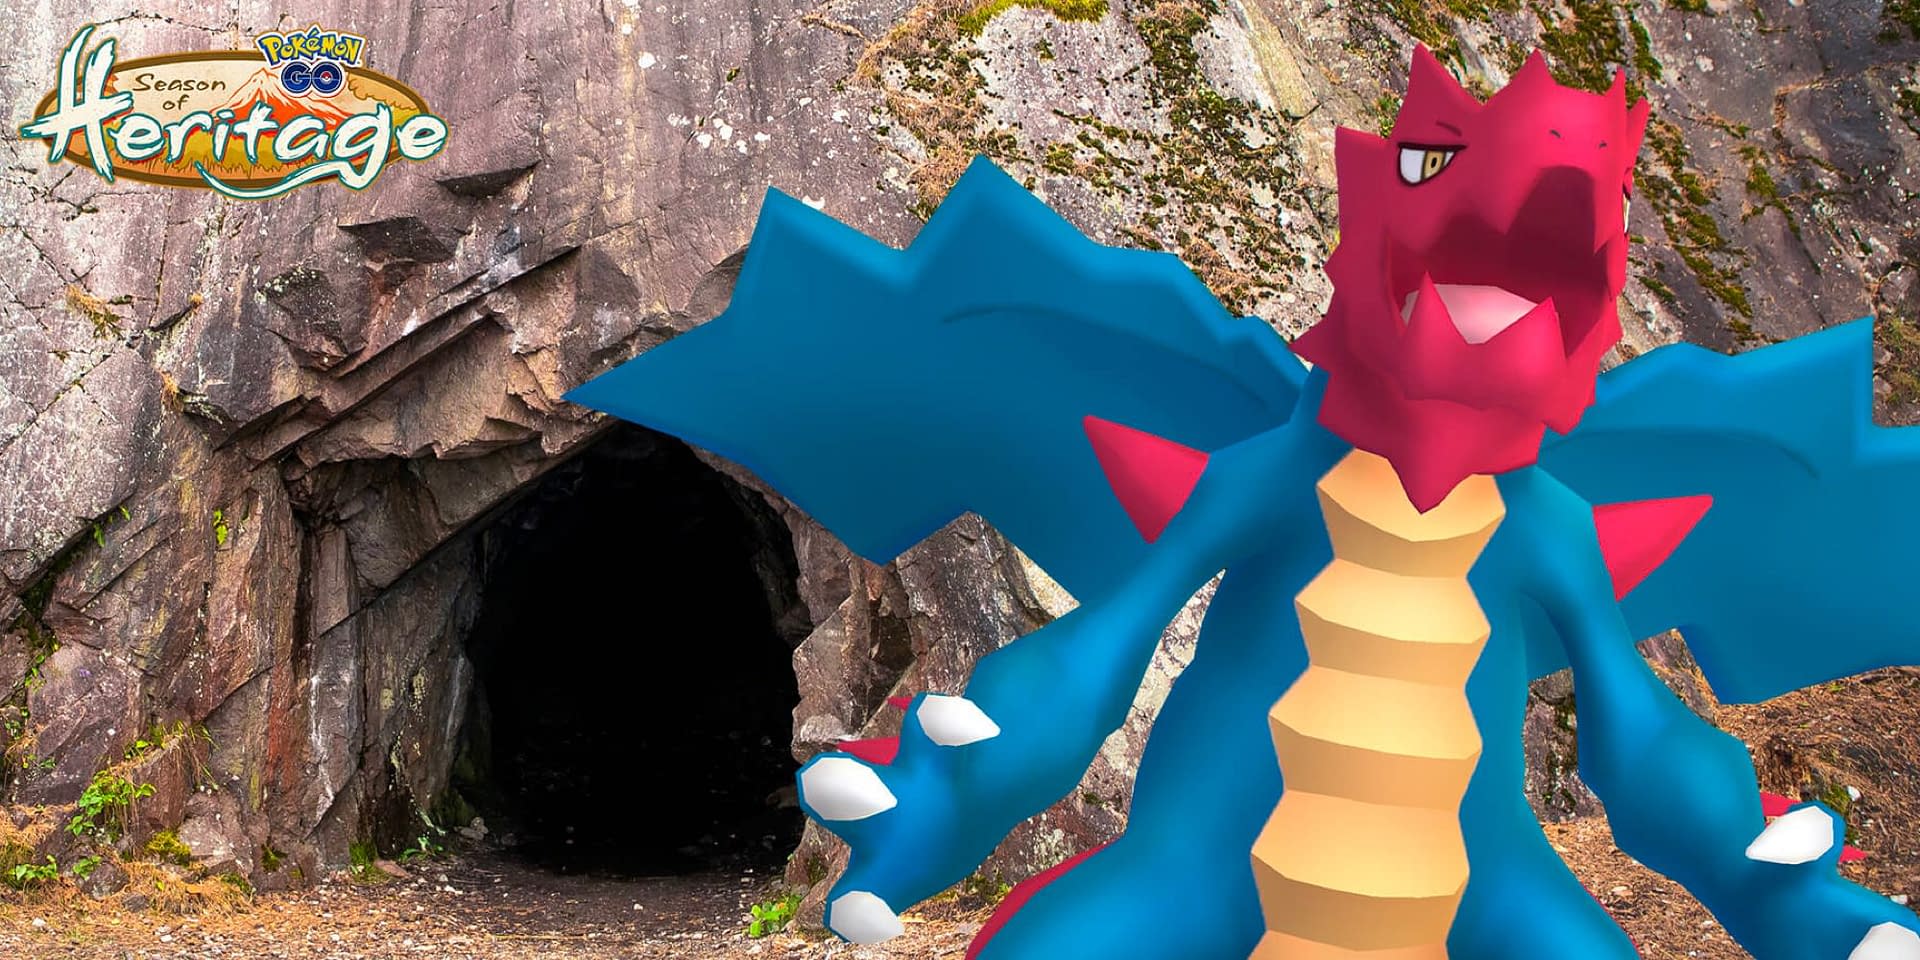 Pokémon GO Dragon Week: Timed Research, Spawns, Eggs, Raids, Shiny Deino